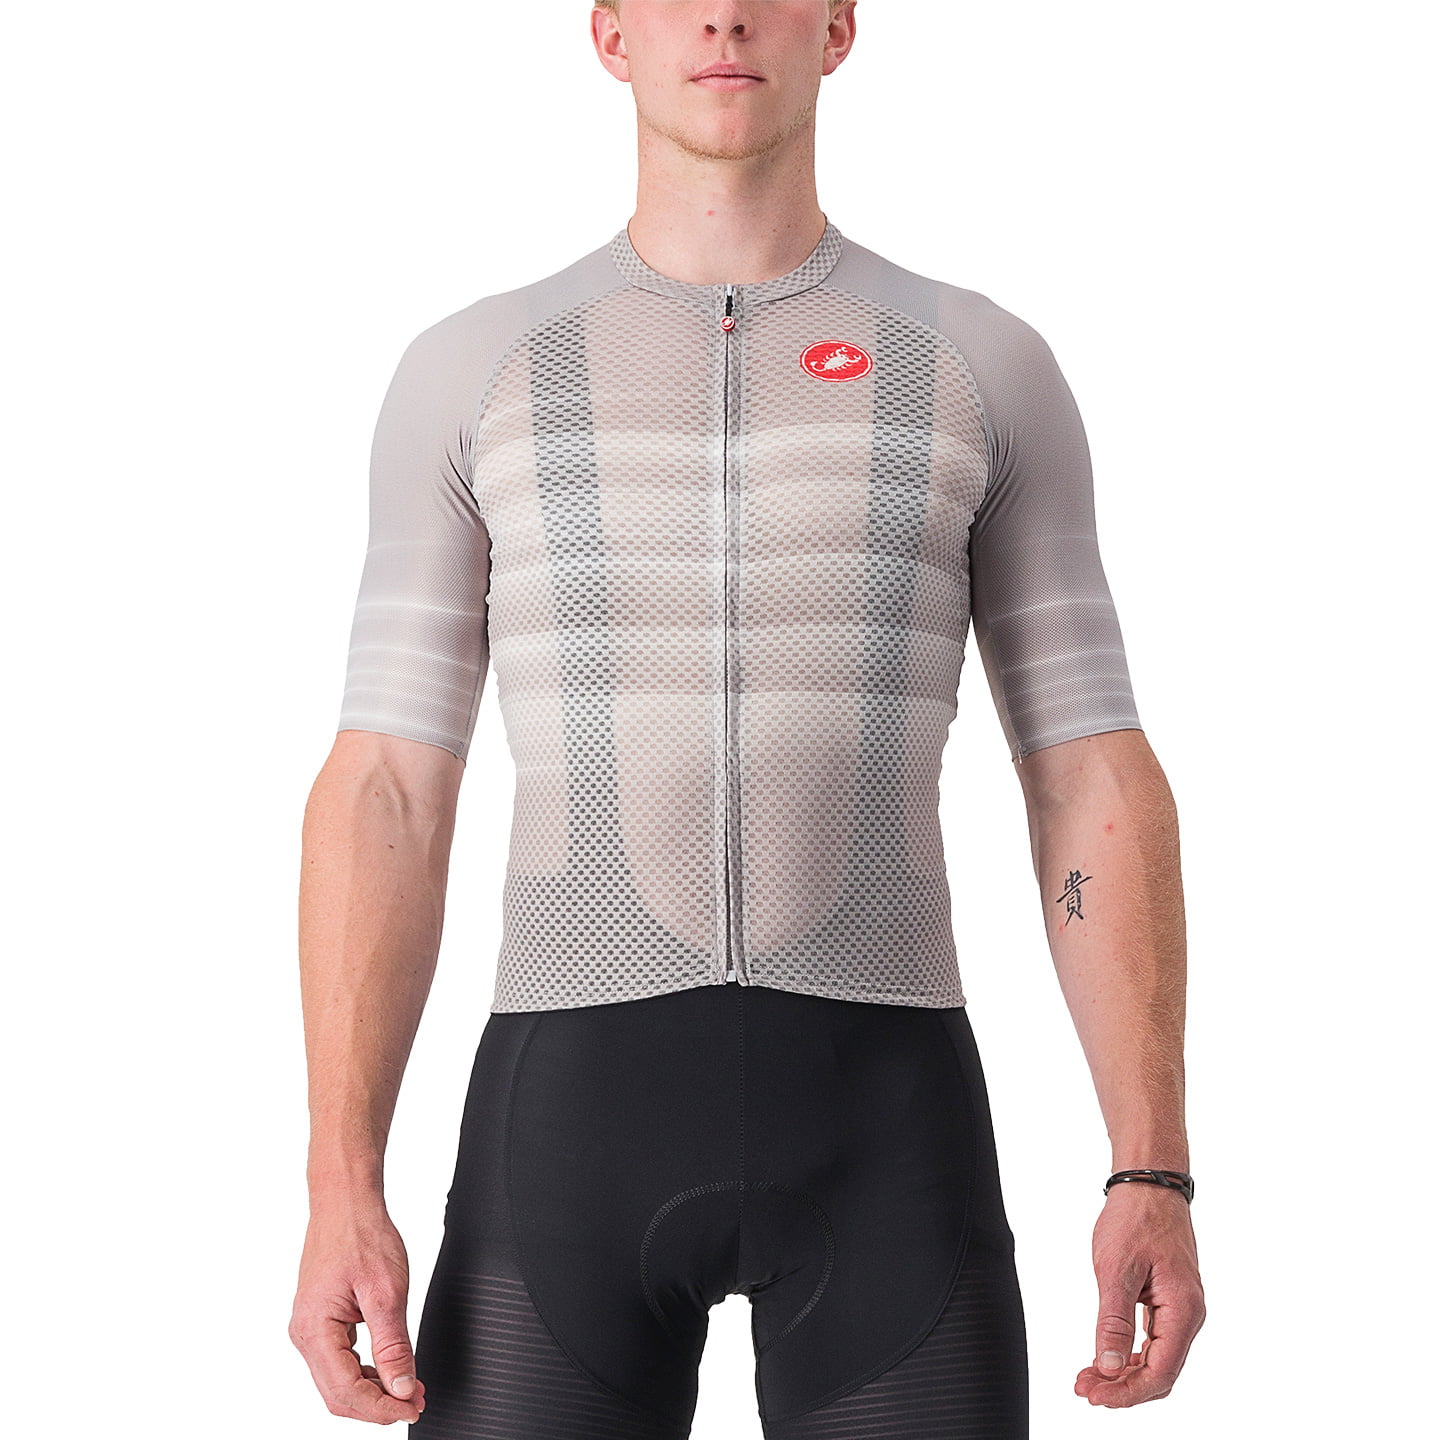 CASTELLI Climber’s 3.0 SL 2 Short Sleeve Jersey Short Sleeve Jersey, for men, size S, Cycling jersey, Cycling clothing